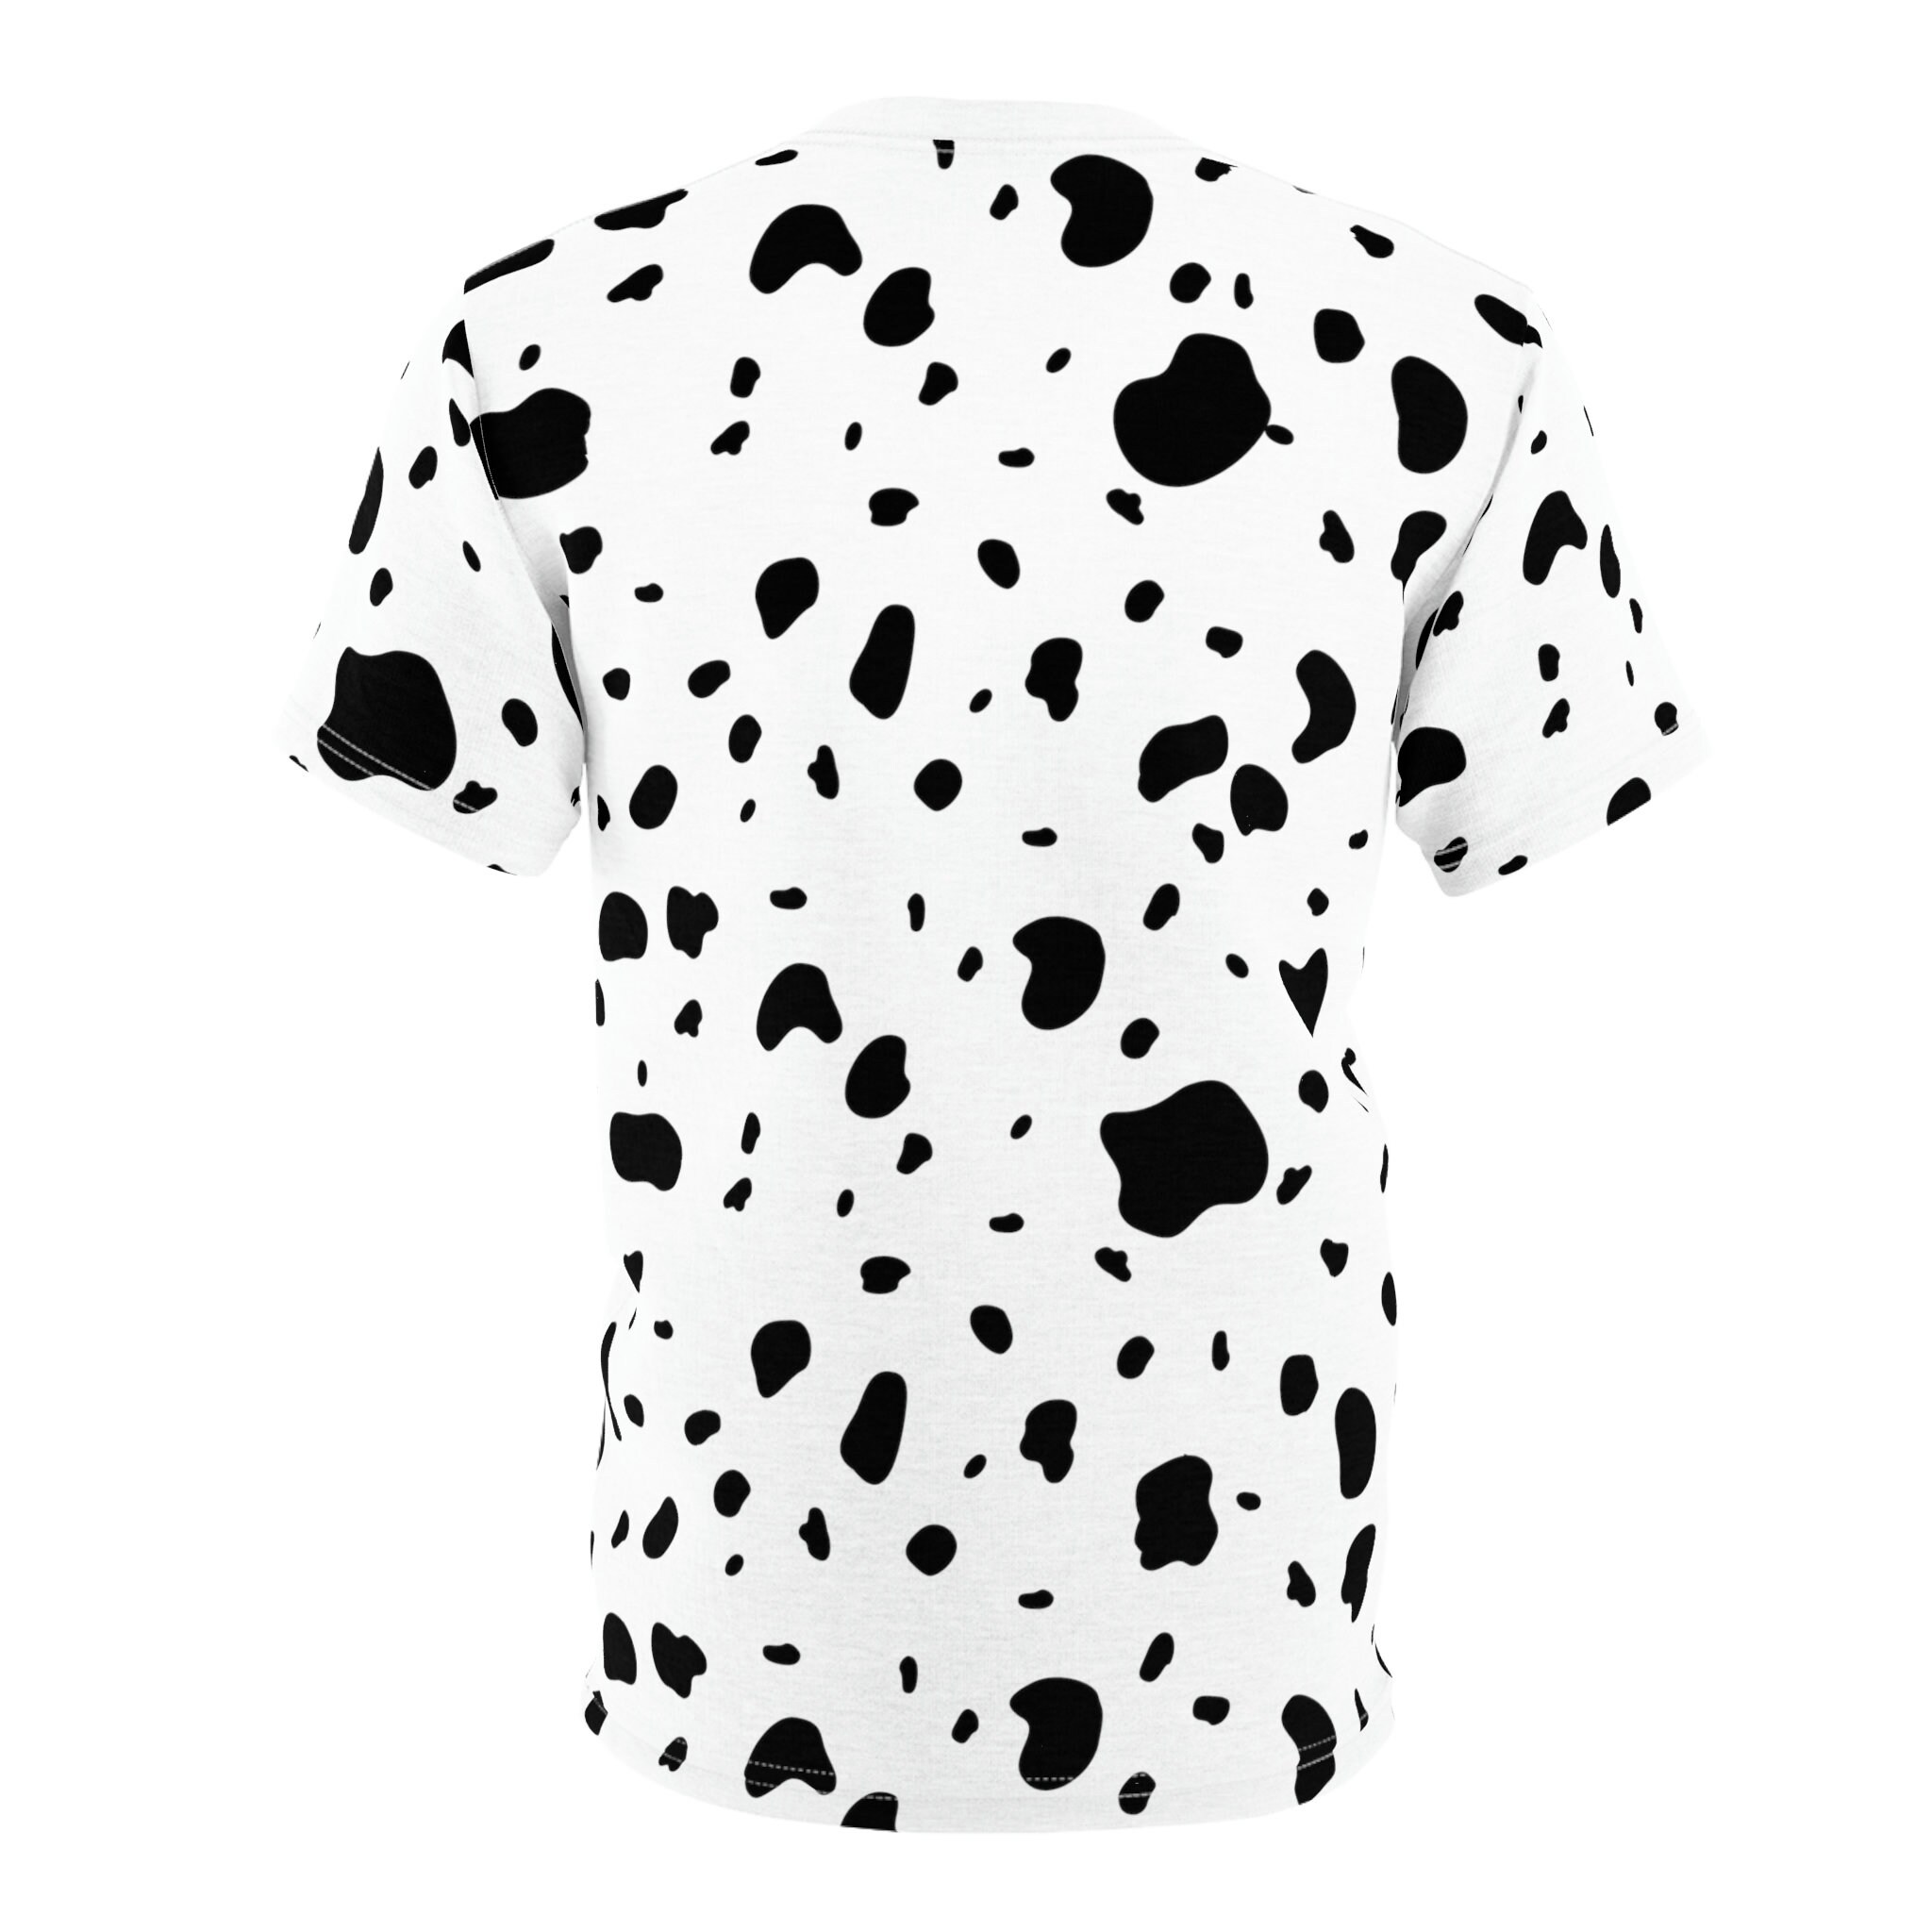 PRETEND I'M a DALMATIAN Dog T Shirt Graphic by shipna2005